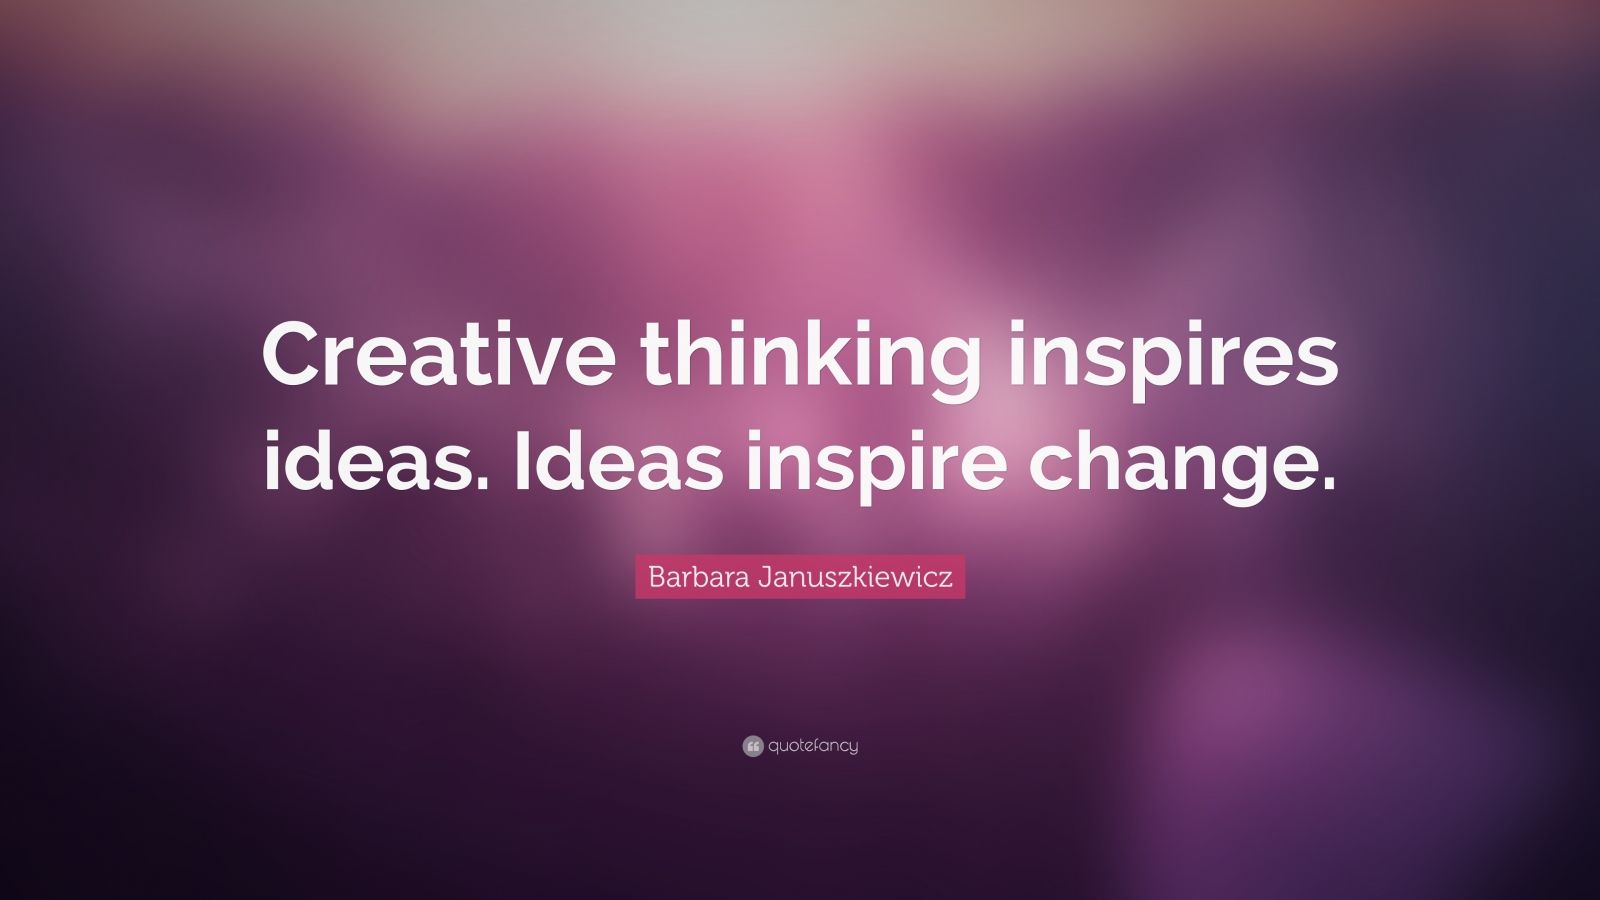 Barbara Januszkiewicz Quote: “Creative thinking inspires ideas. Ideas